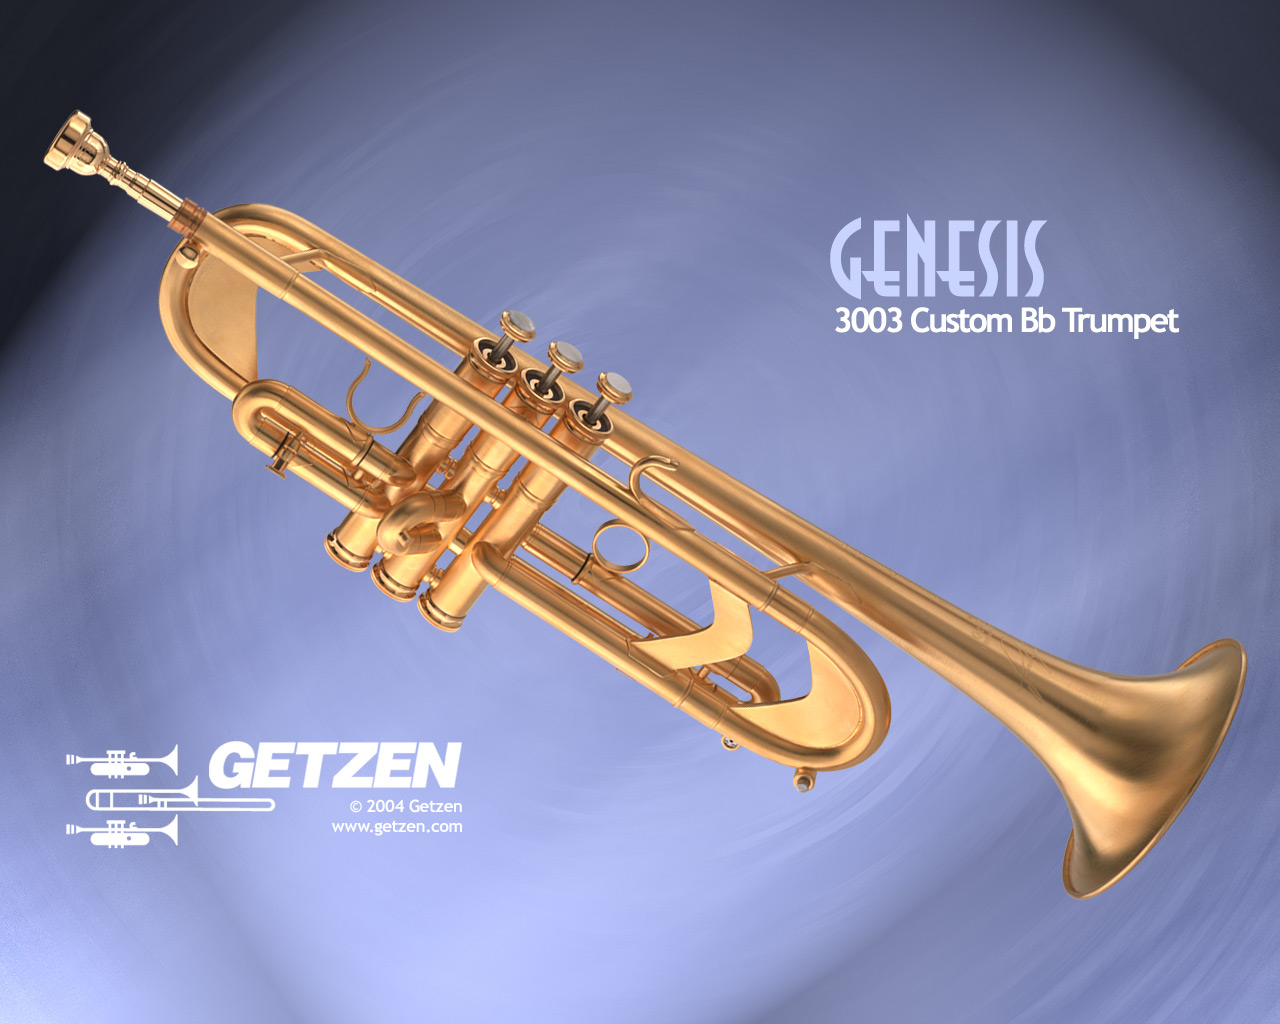 1152 X - Getzen Genesis 3003 Trumpet , HD Wallpaper & Backgrounds